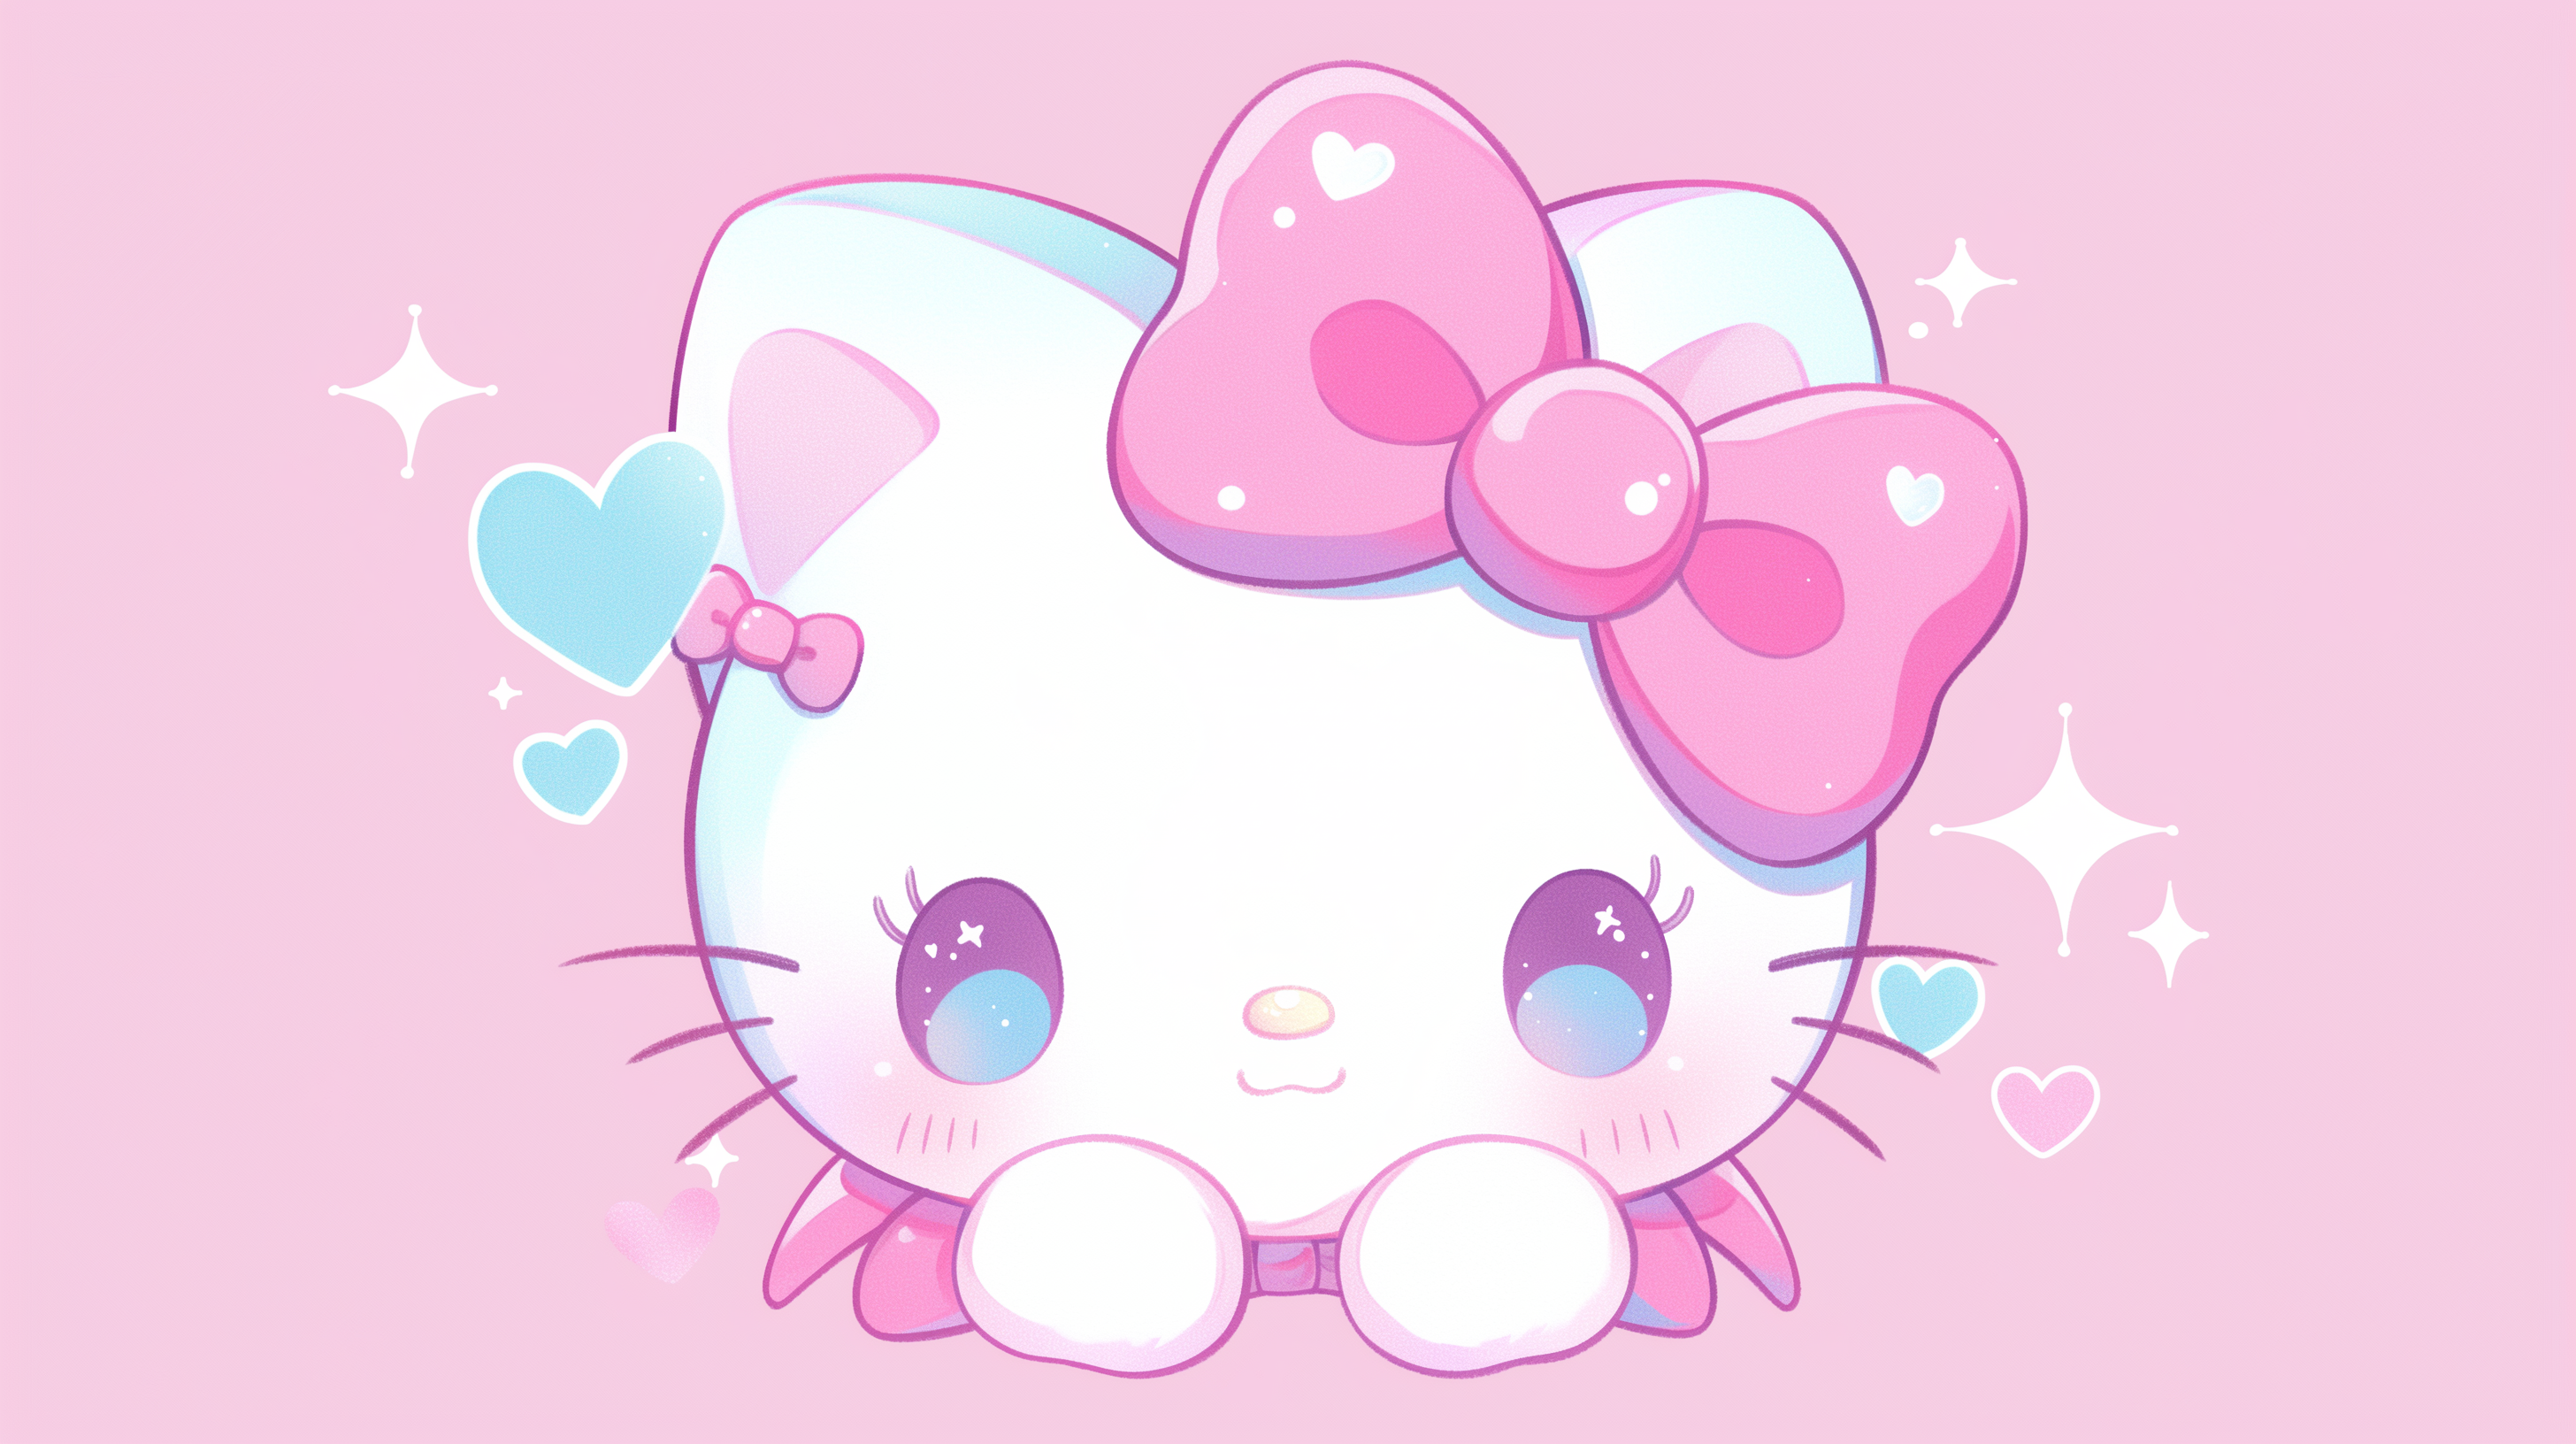 Hello Kitty Cute Pink HD Wallpaper by robokoboto